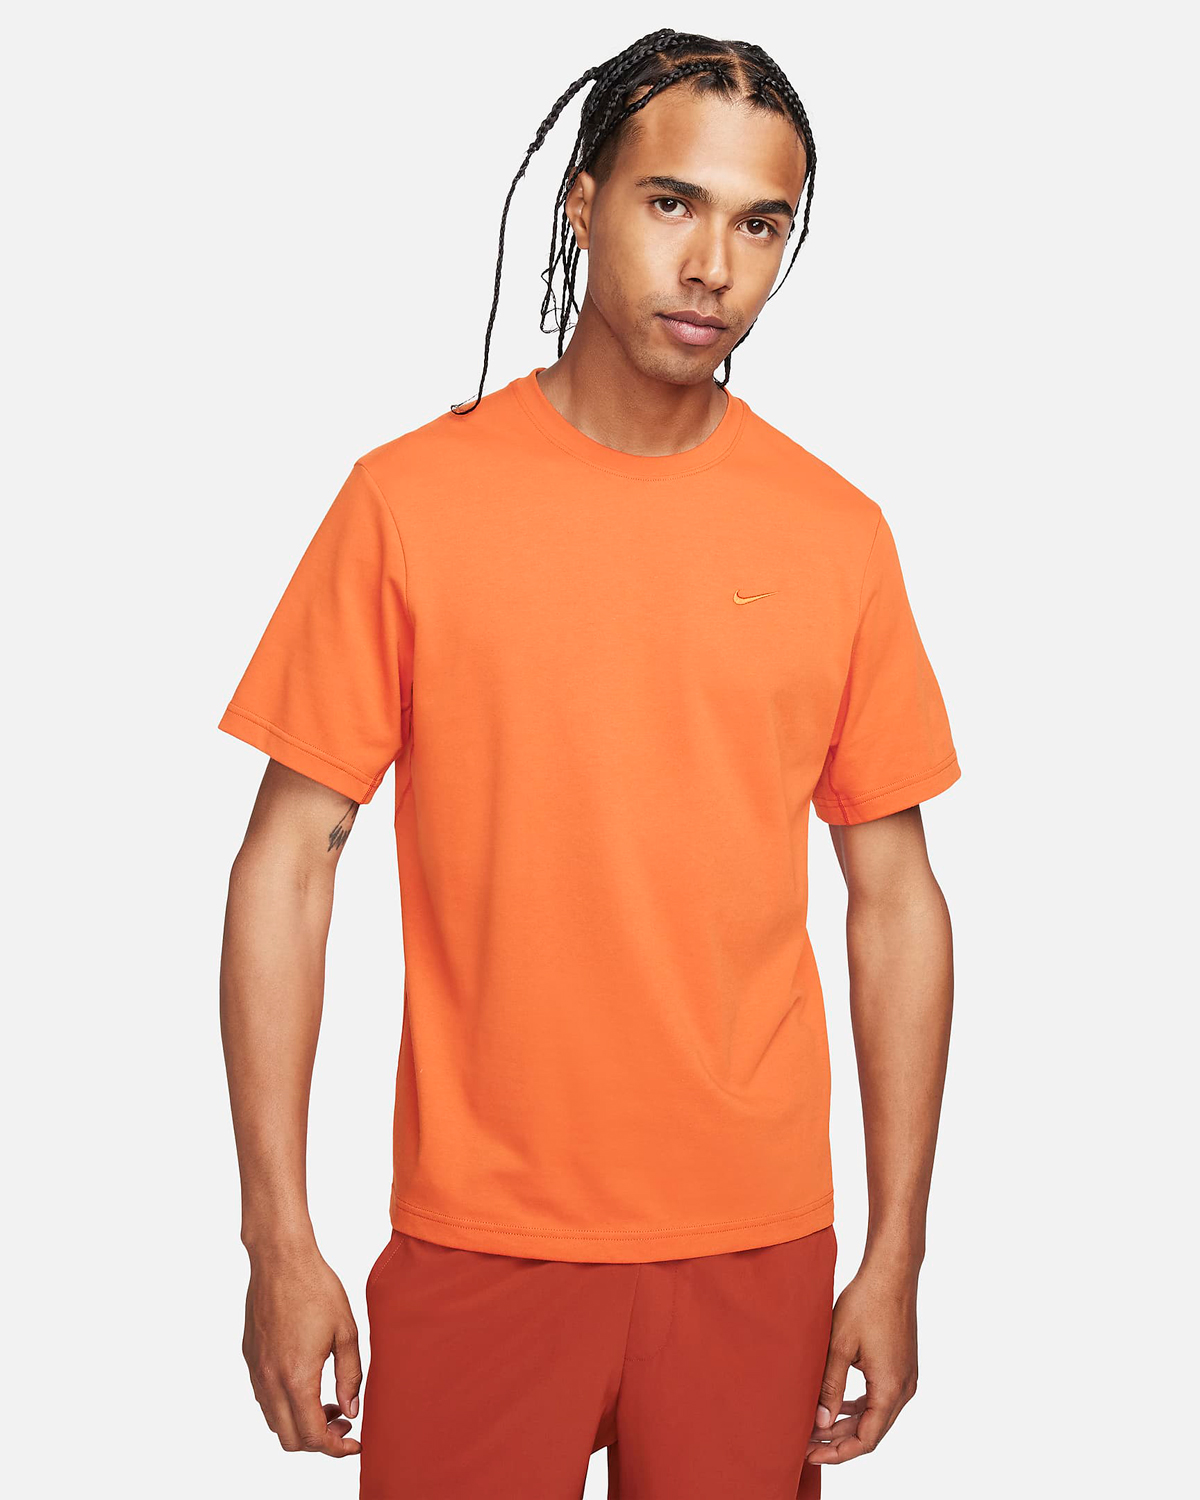 Nike-Shirt-Campfire-Orange-1